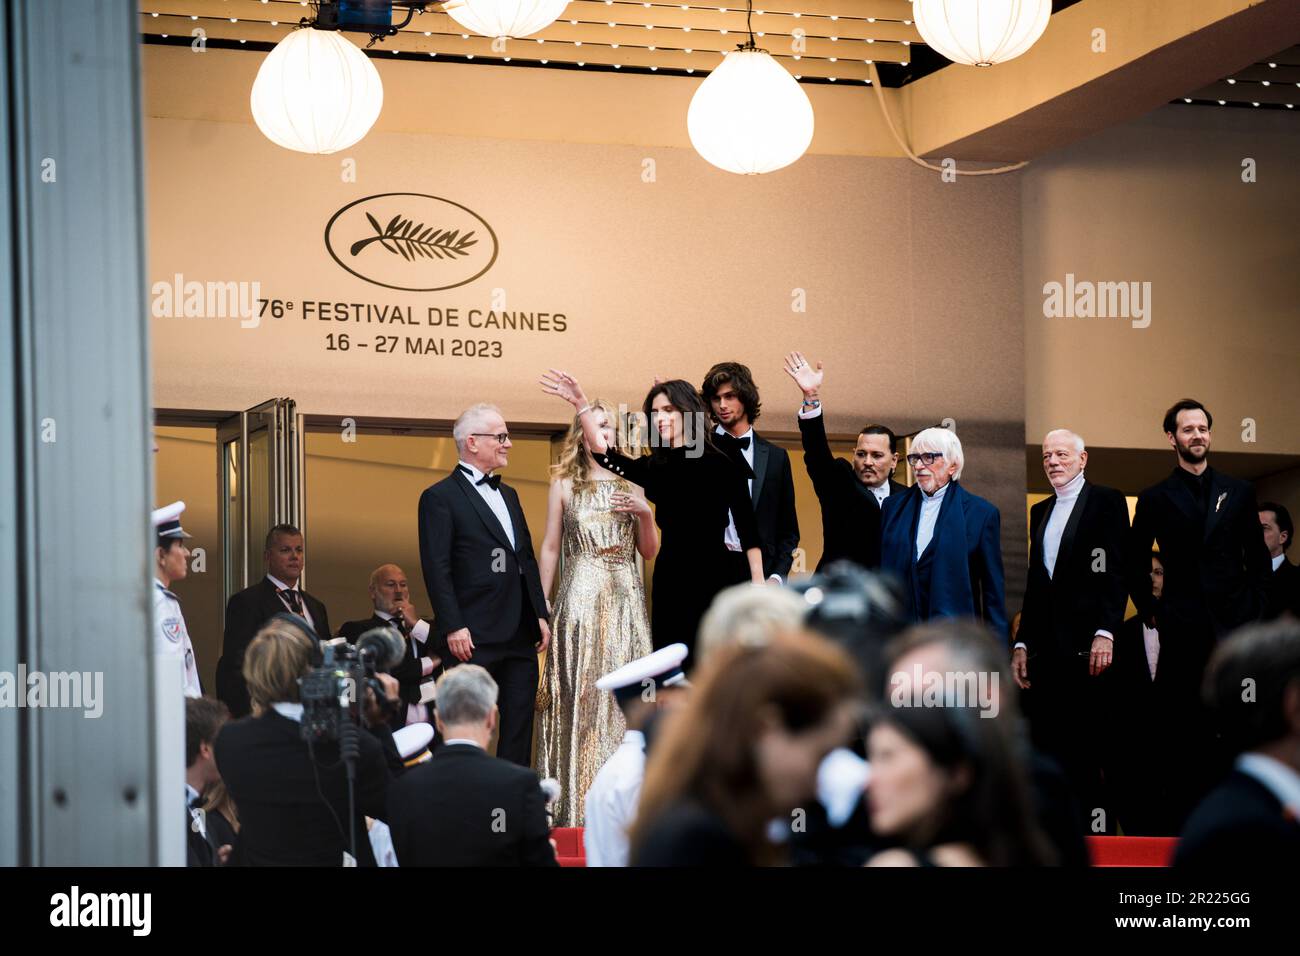 Cannes, Frankreich, 16. Mai 2023, Melvil Poupaud, Pascal Greggory, Benjamin Lavernhe, Pierre Richard, Johnny Depp, Director Maiwenn, Diego Le fur und Pau Stockfoto